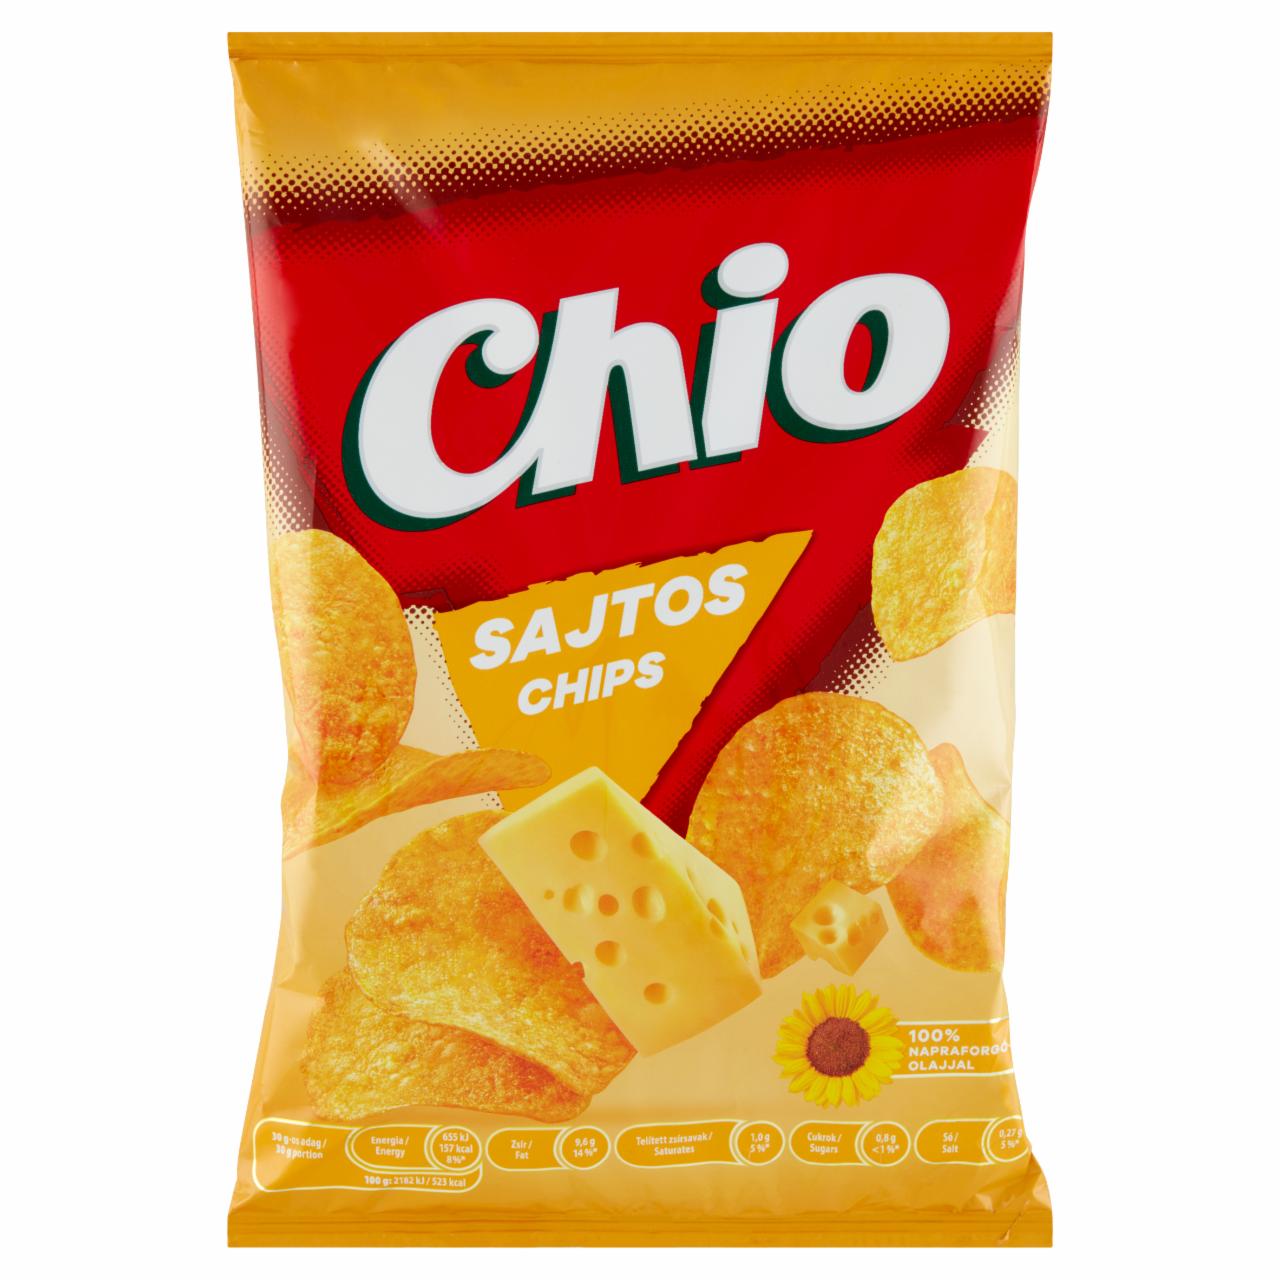 Képek - Chio sajtos chips